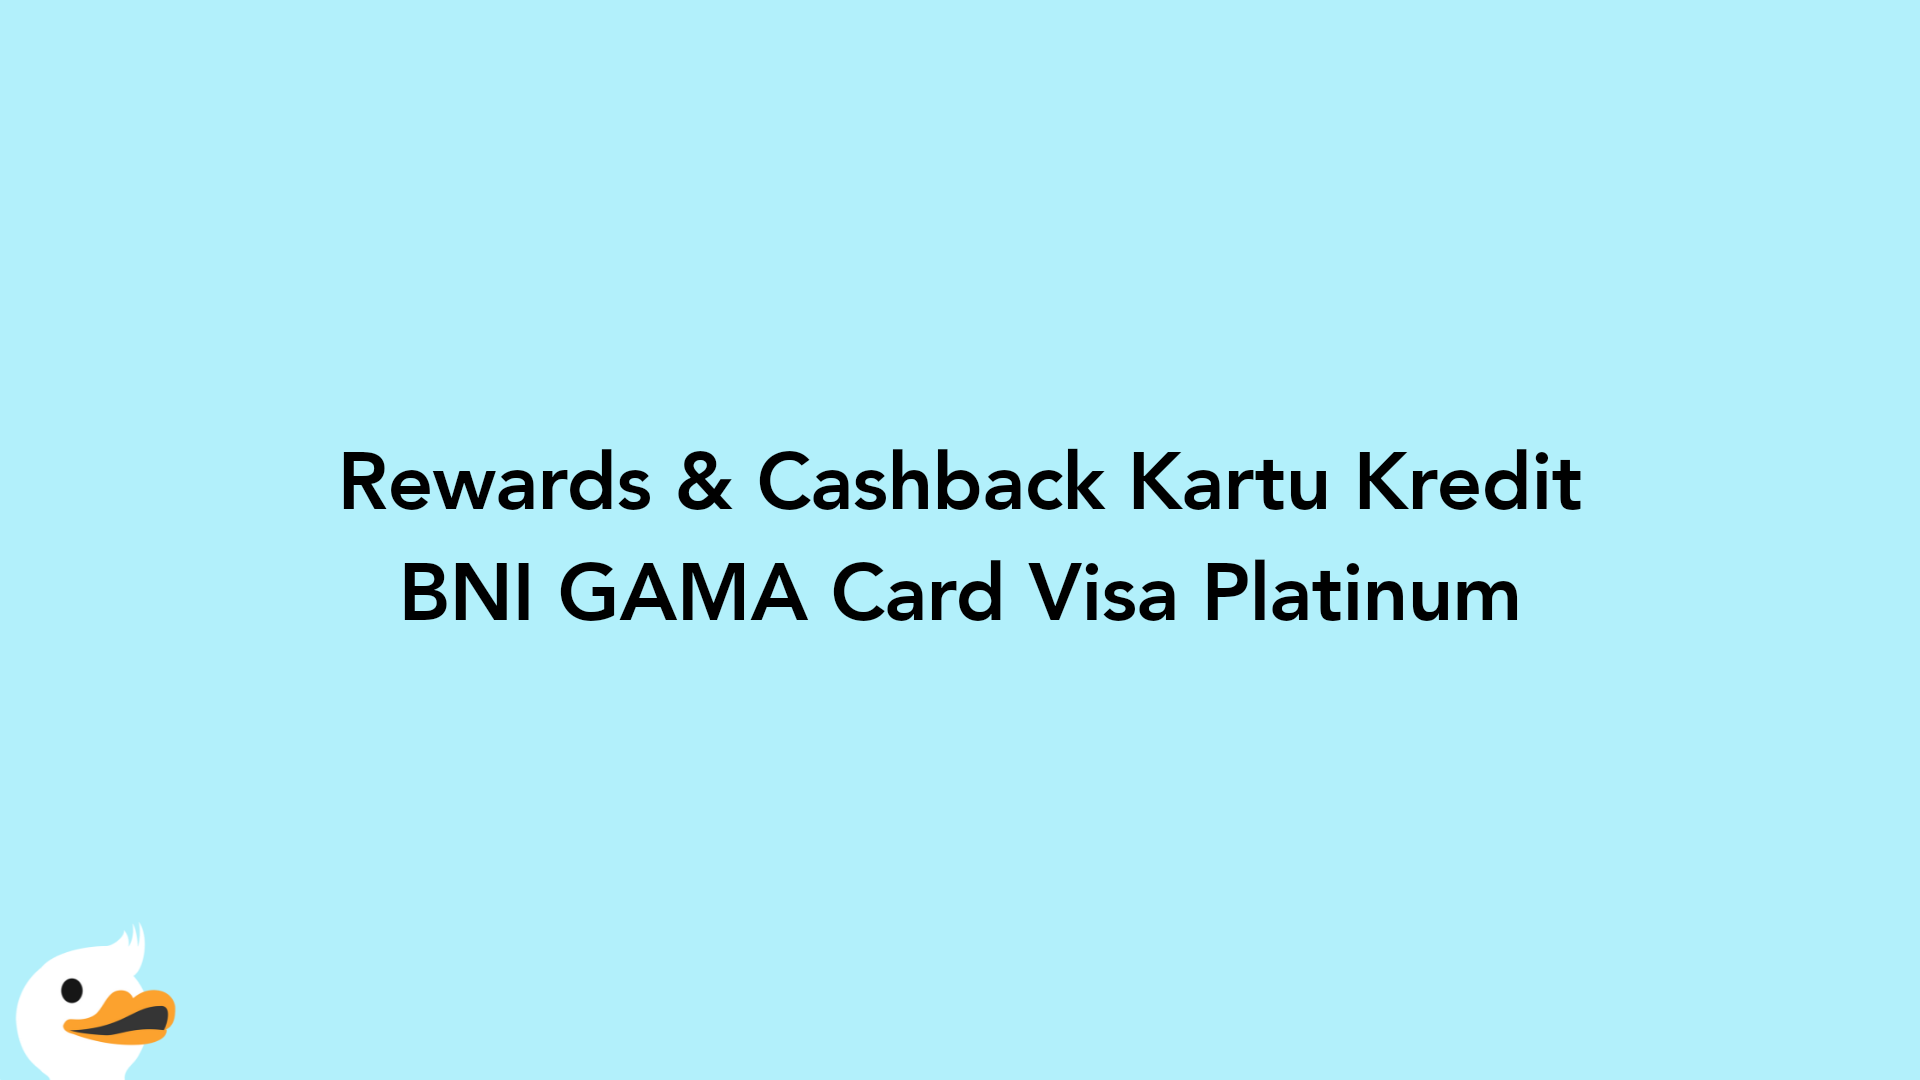 Rewards & Cashback Kartu Kredit BNI GAMA Card Visa Platinum